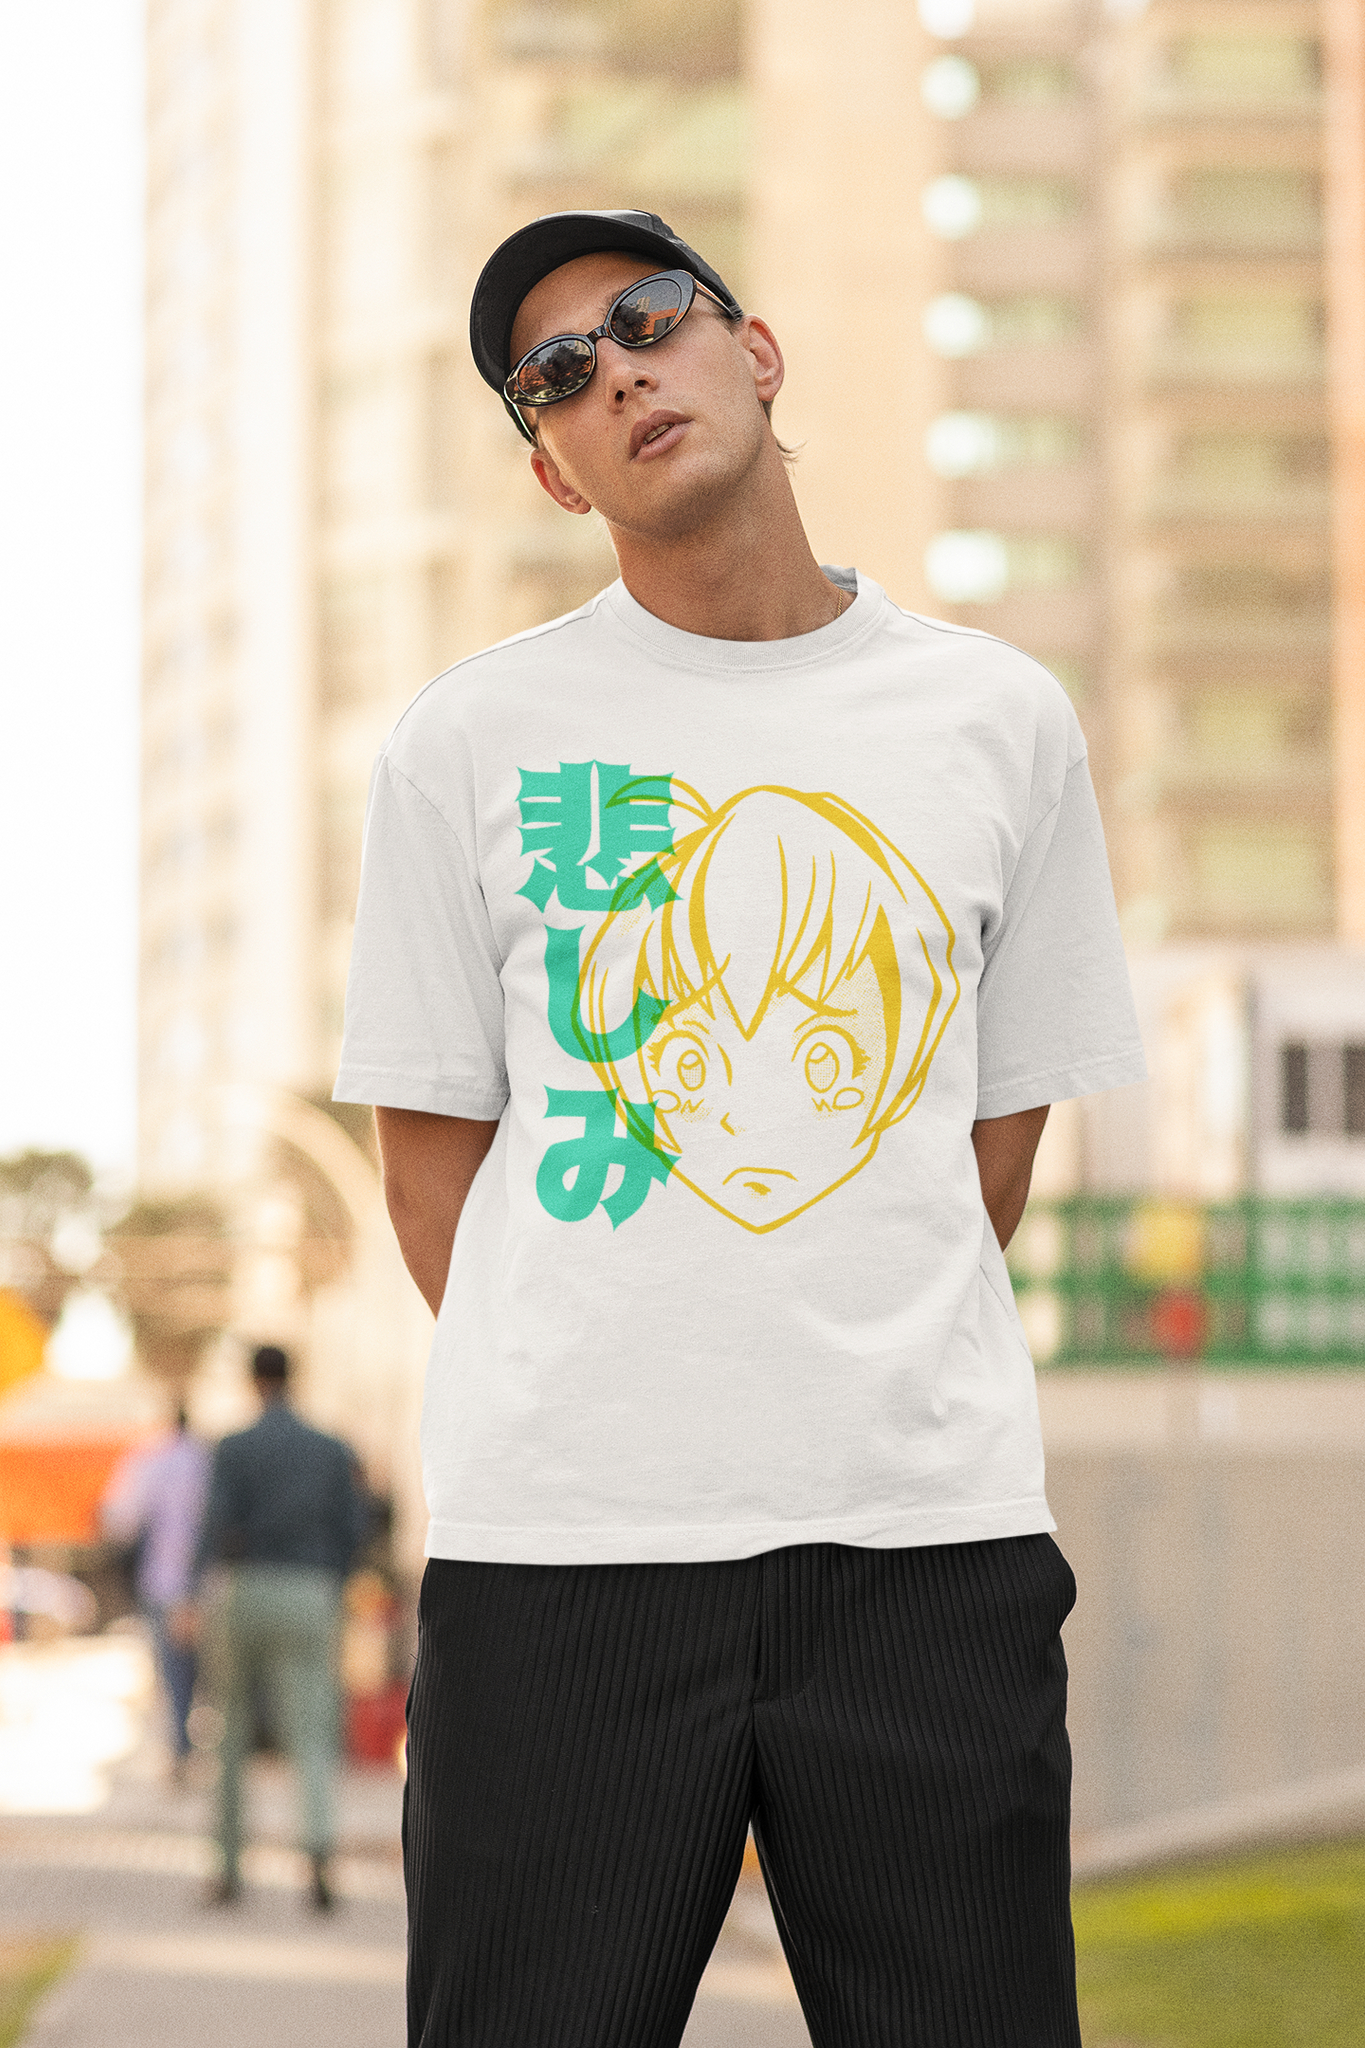 No Worries T-Shirt | Yūjin Japanese Anime Streetwear Clothing